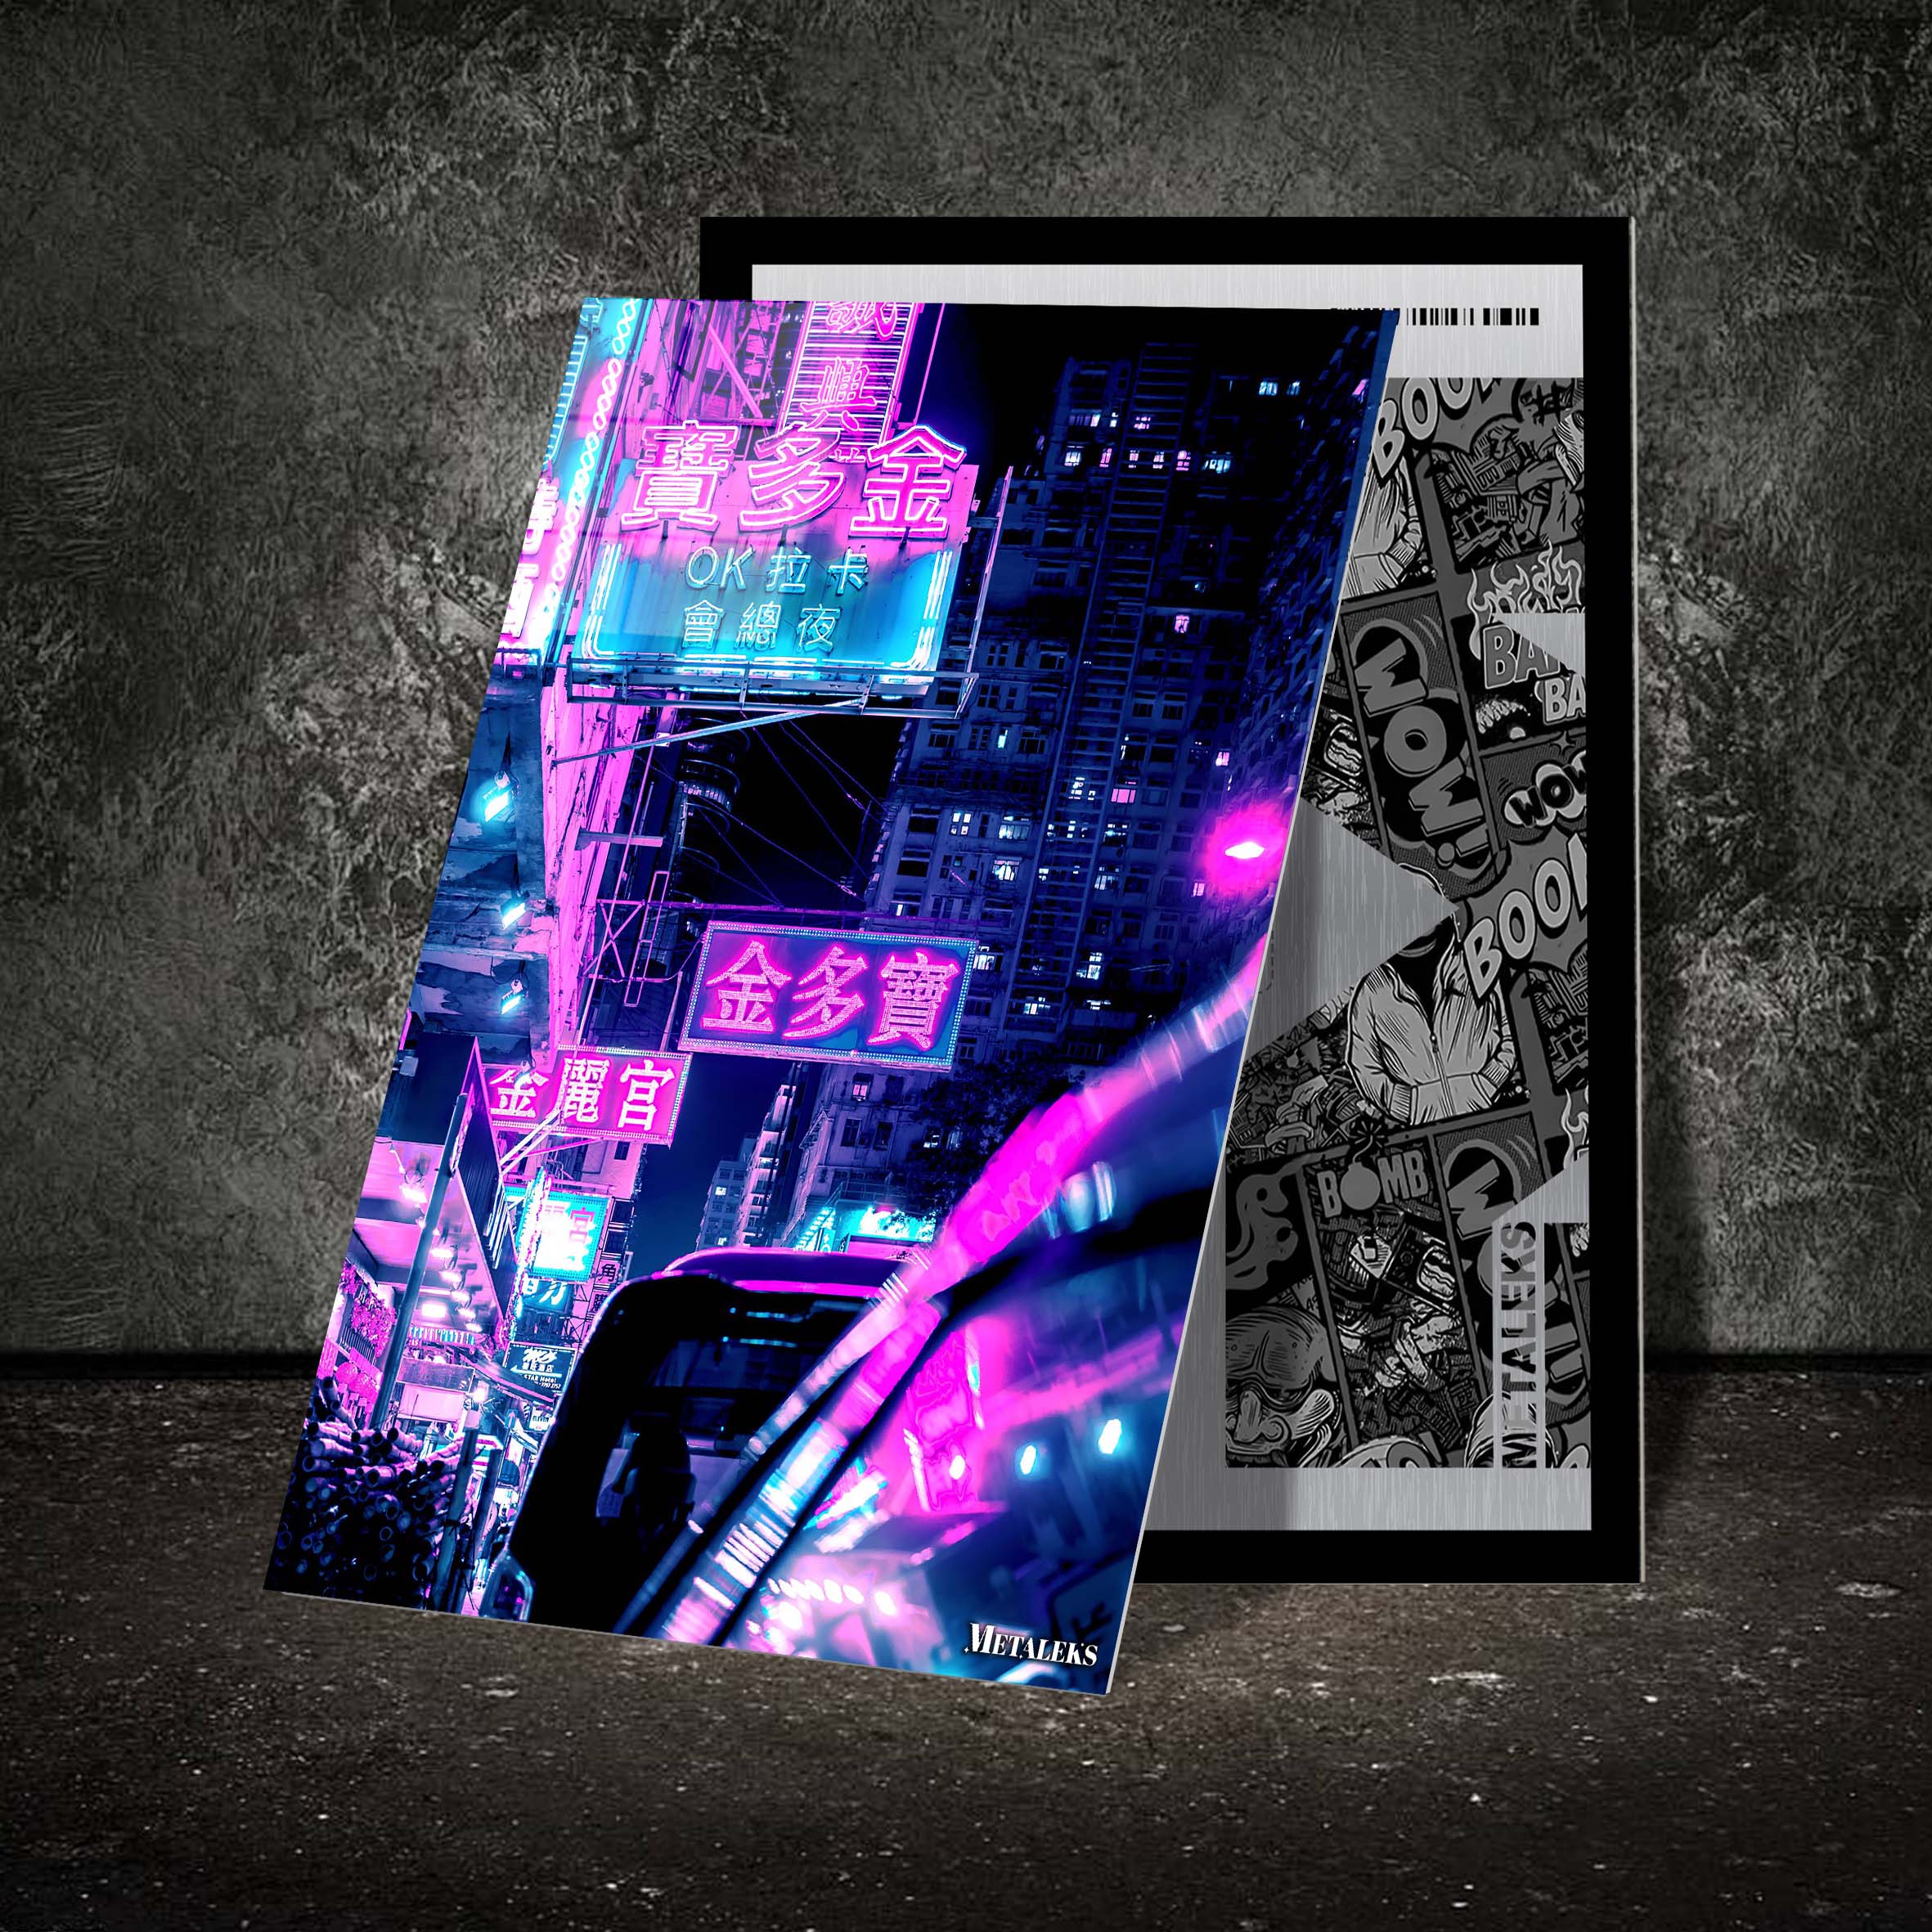 Cyberpunk XXI-designed by @saufahaqqi